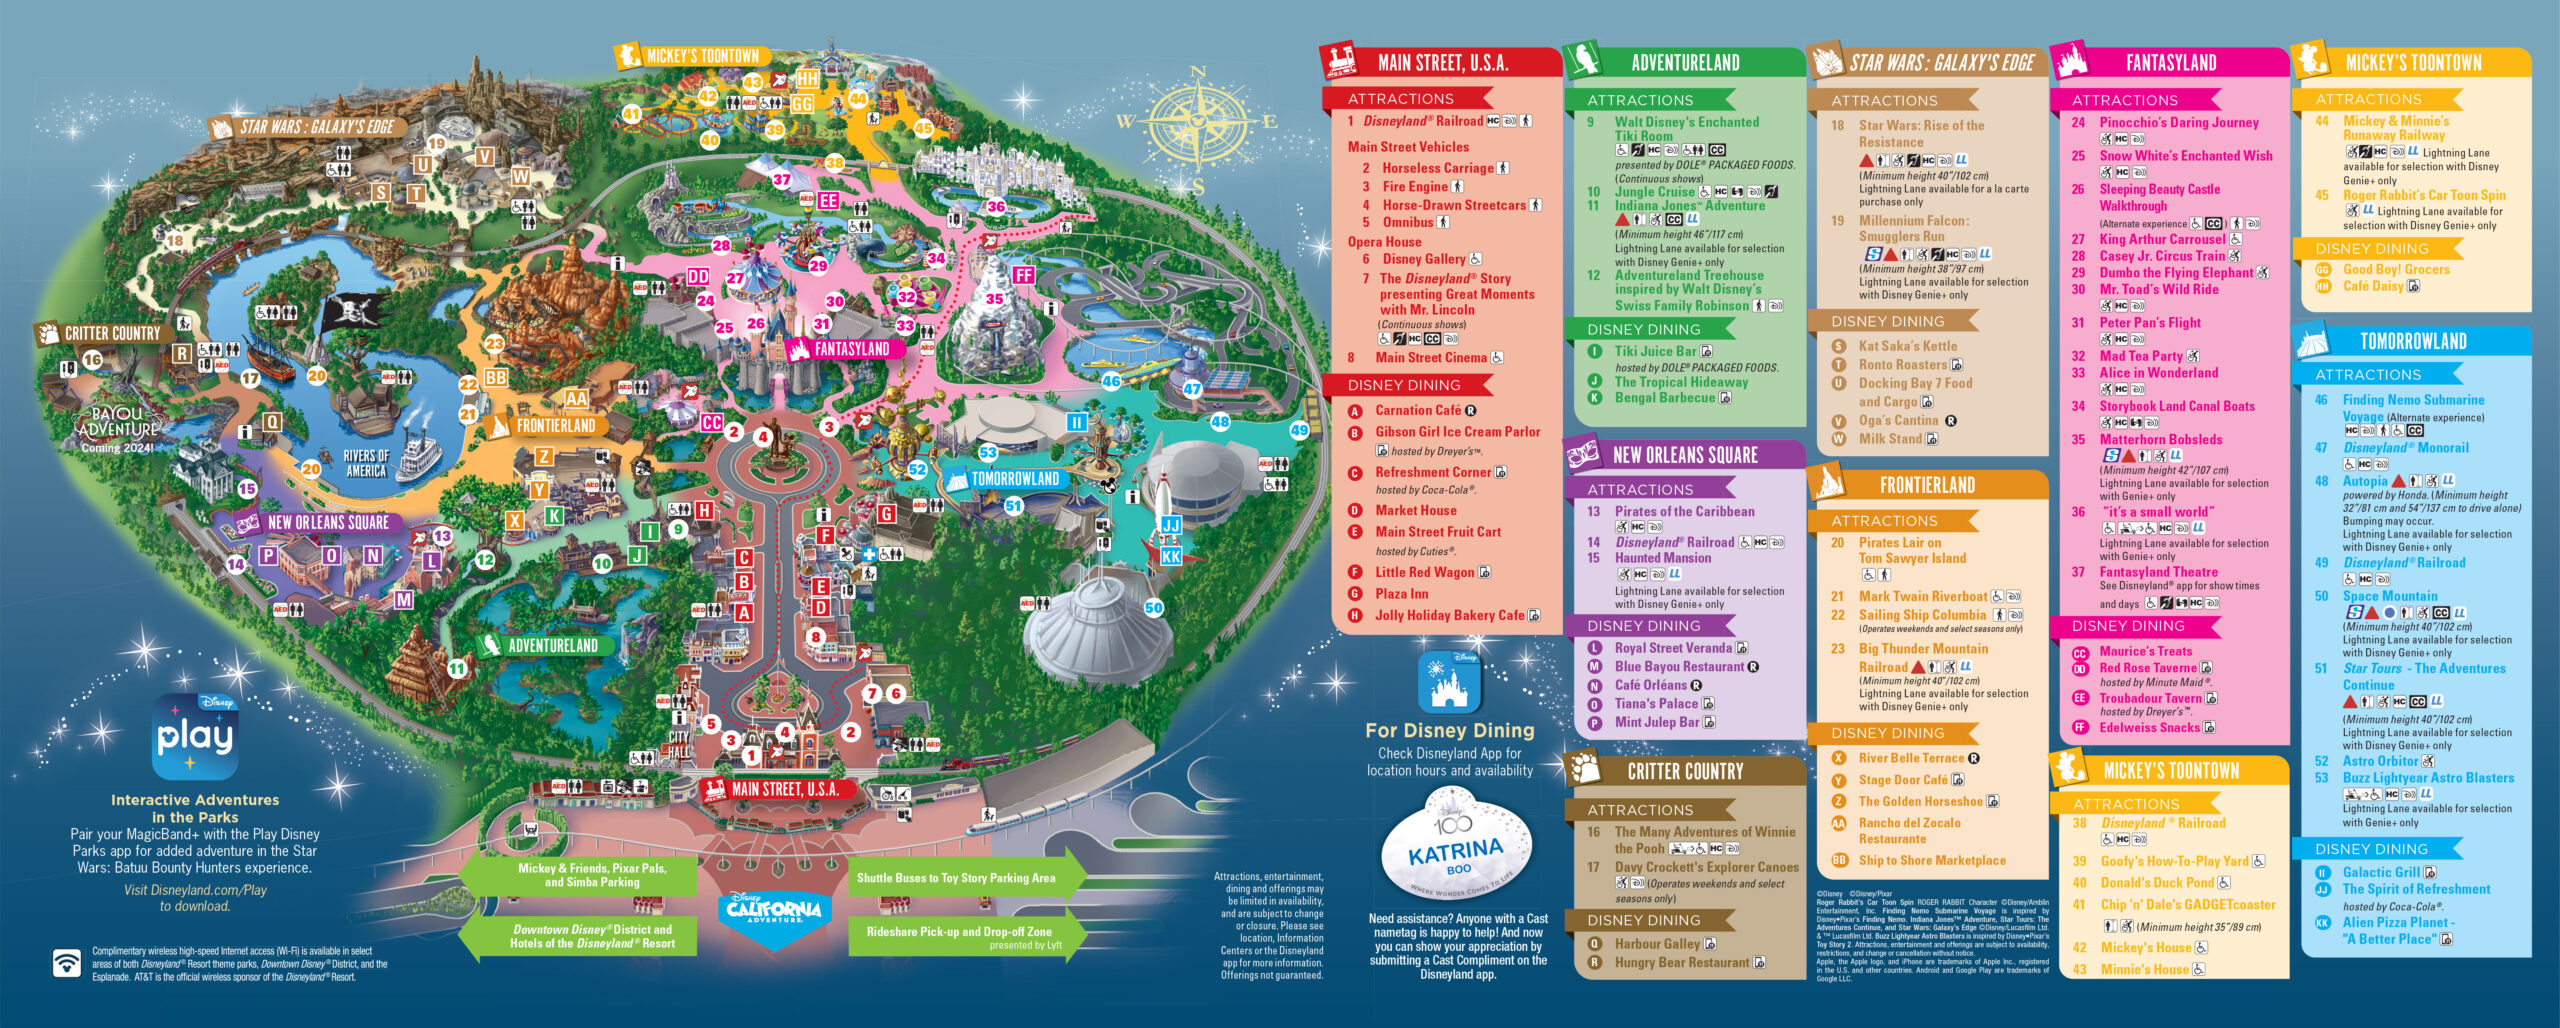 Map of Disneyland